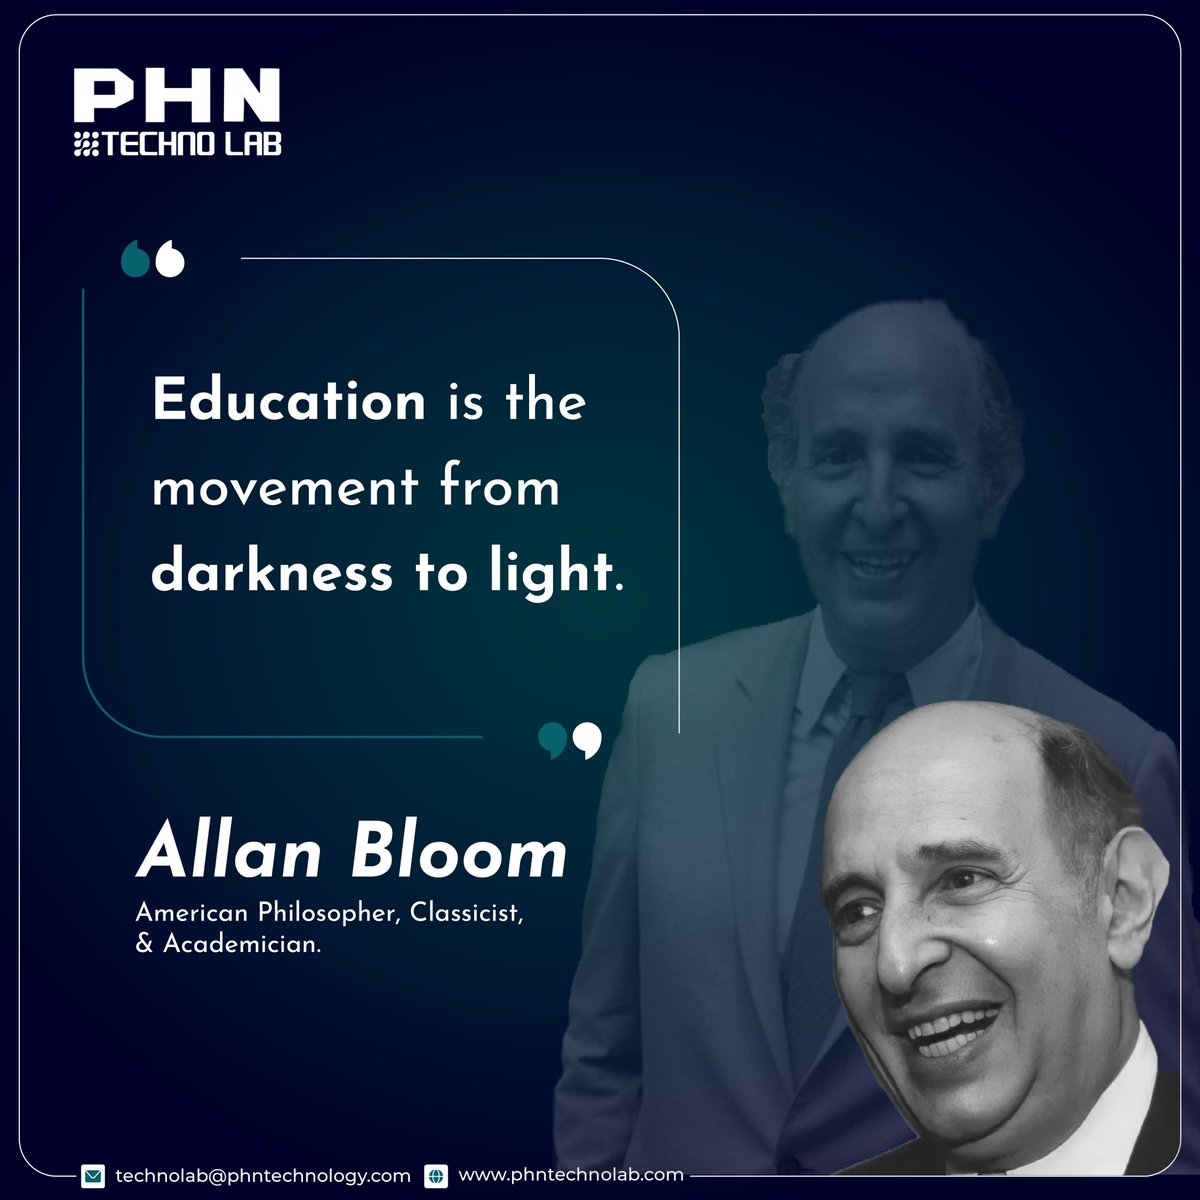 Education is the movement from darkness to light. Allan Bloom
.
.
.
 
#stemeducation #educational #technology #tech #innovation #schools #teachers #phntechnolab #phntechnology #motivationalquotes #Students #teachermotivation #robotics